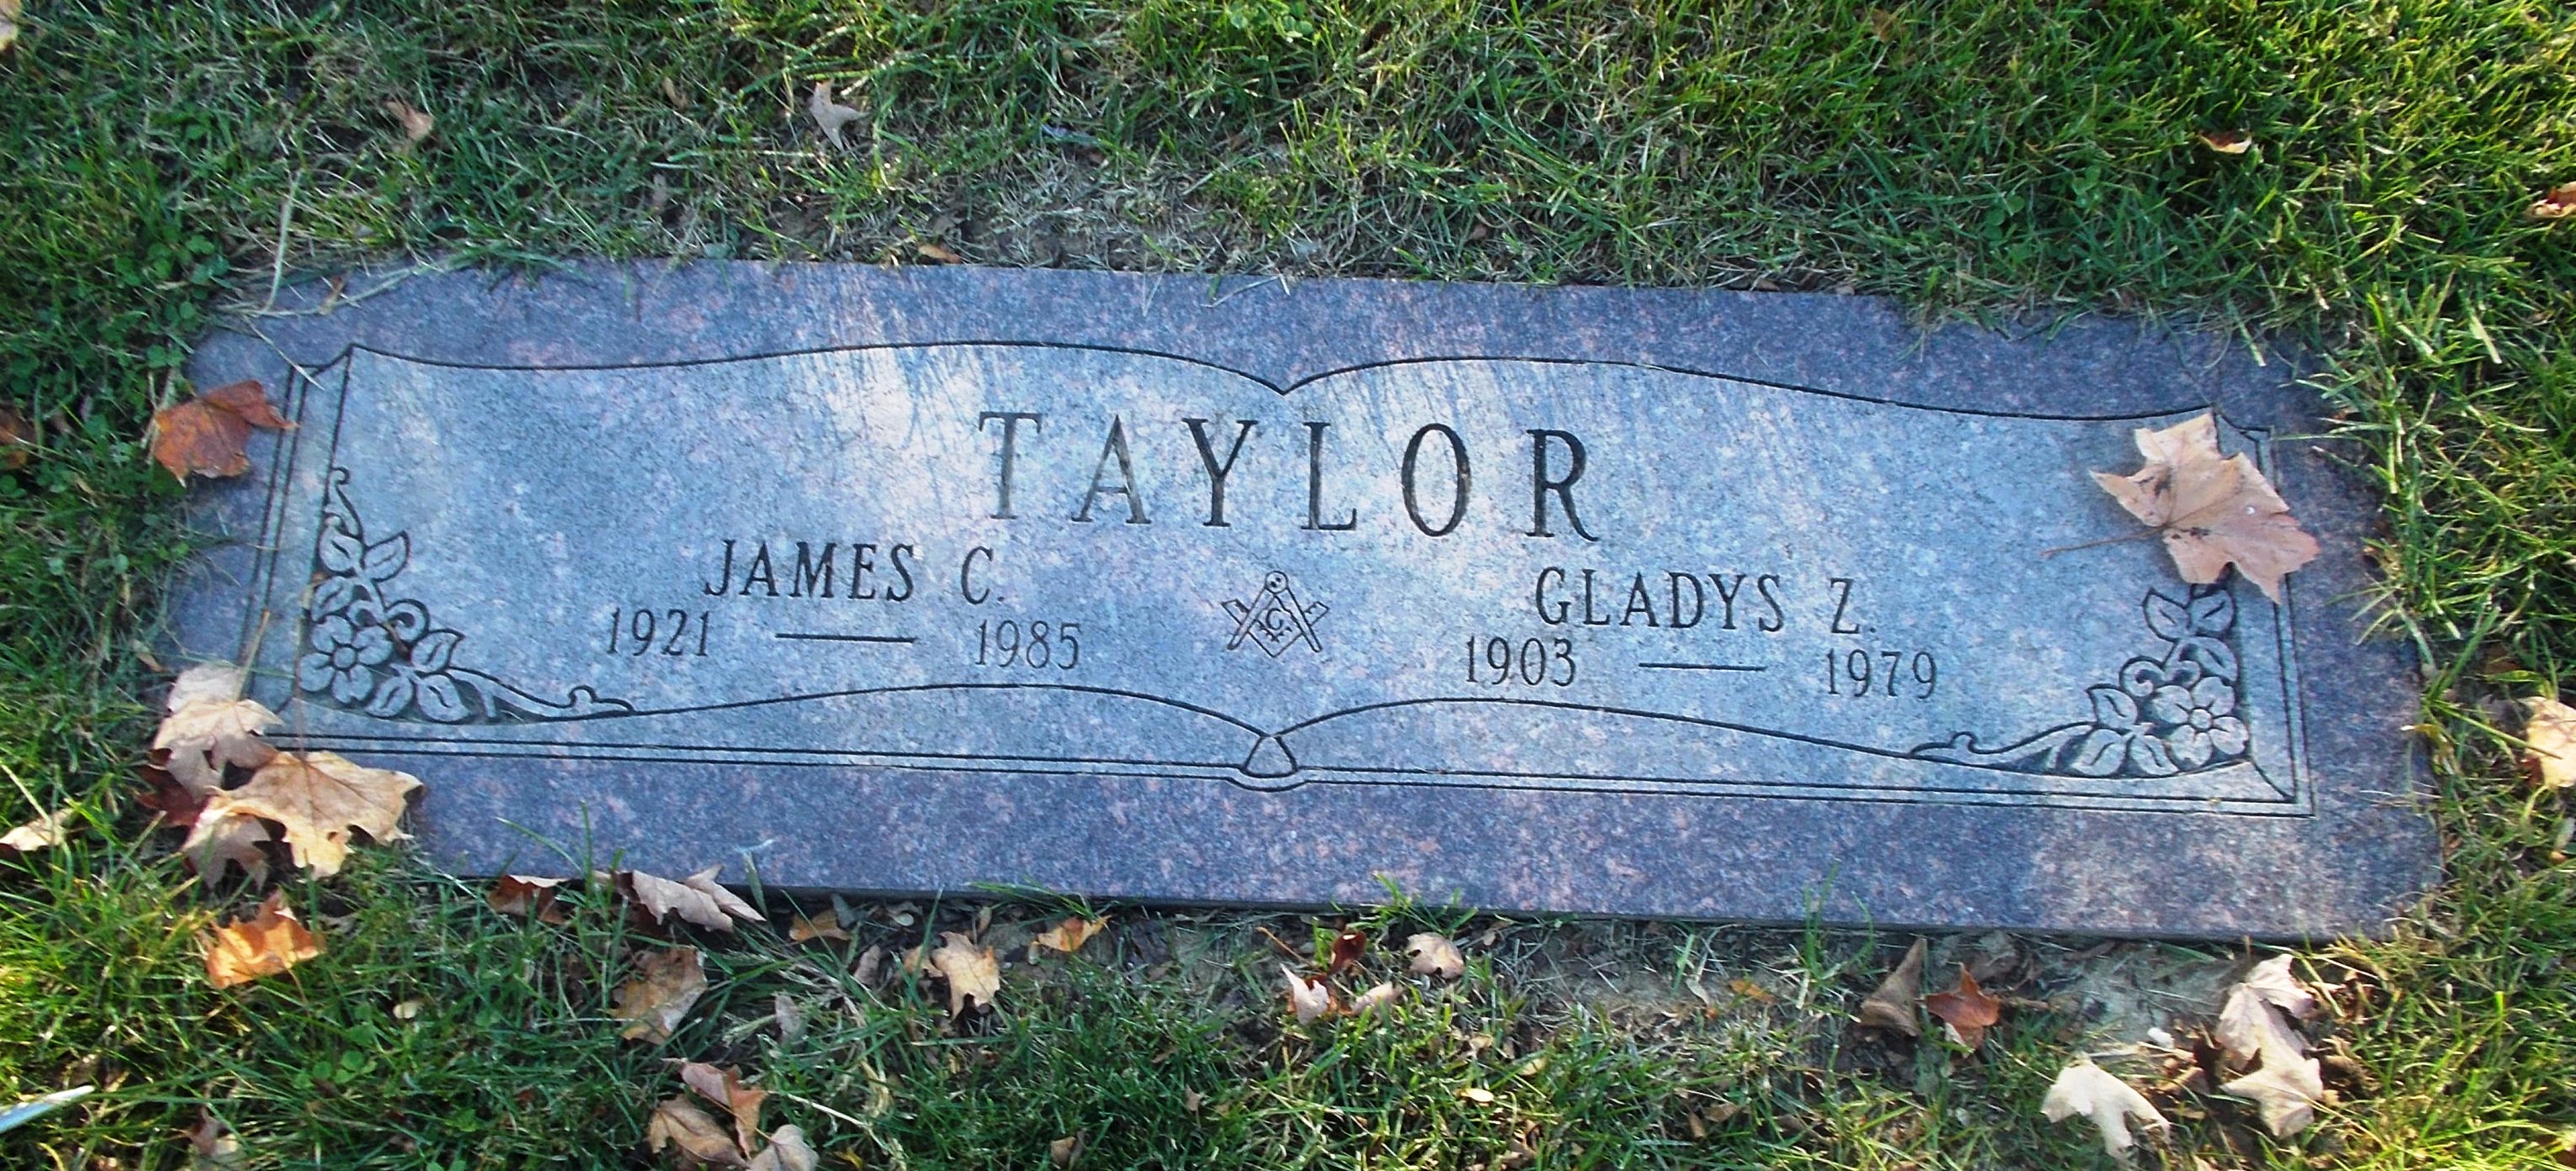 James C Taylor